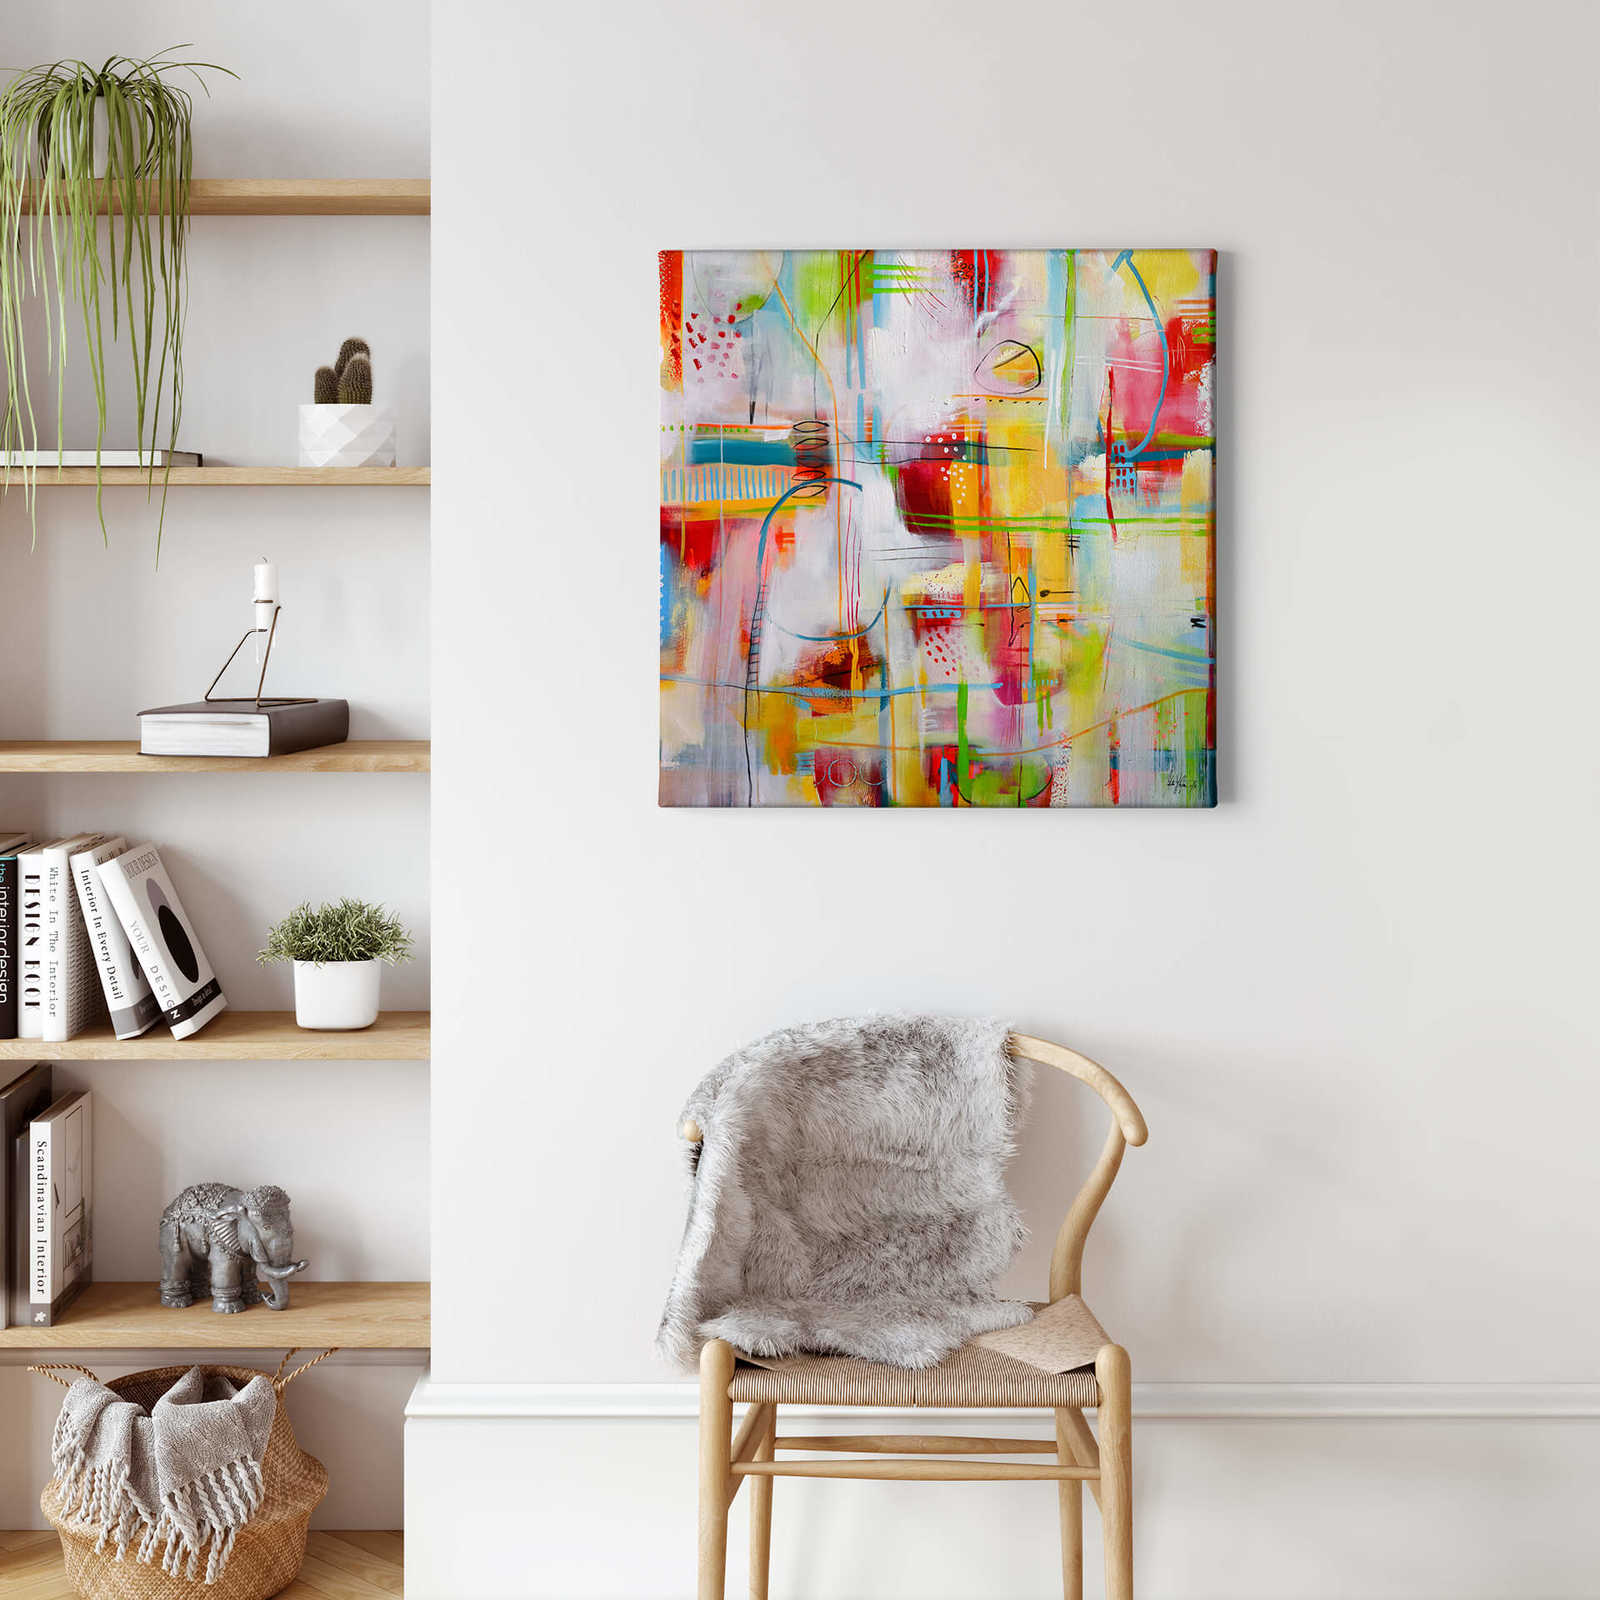             Canvas print abstract art by Fedrau – Colourful
        